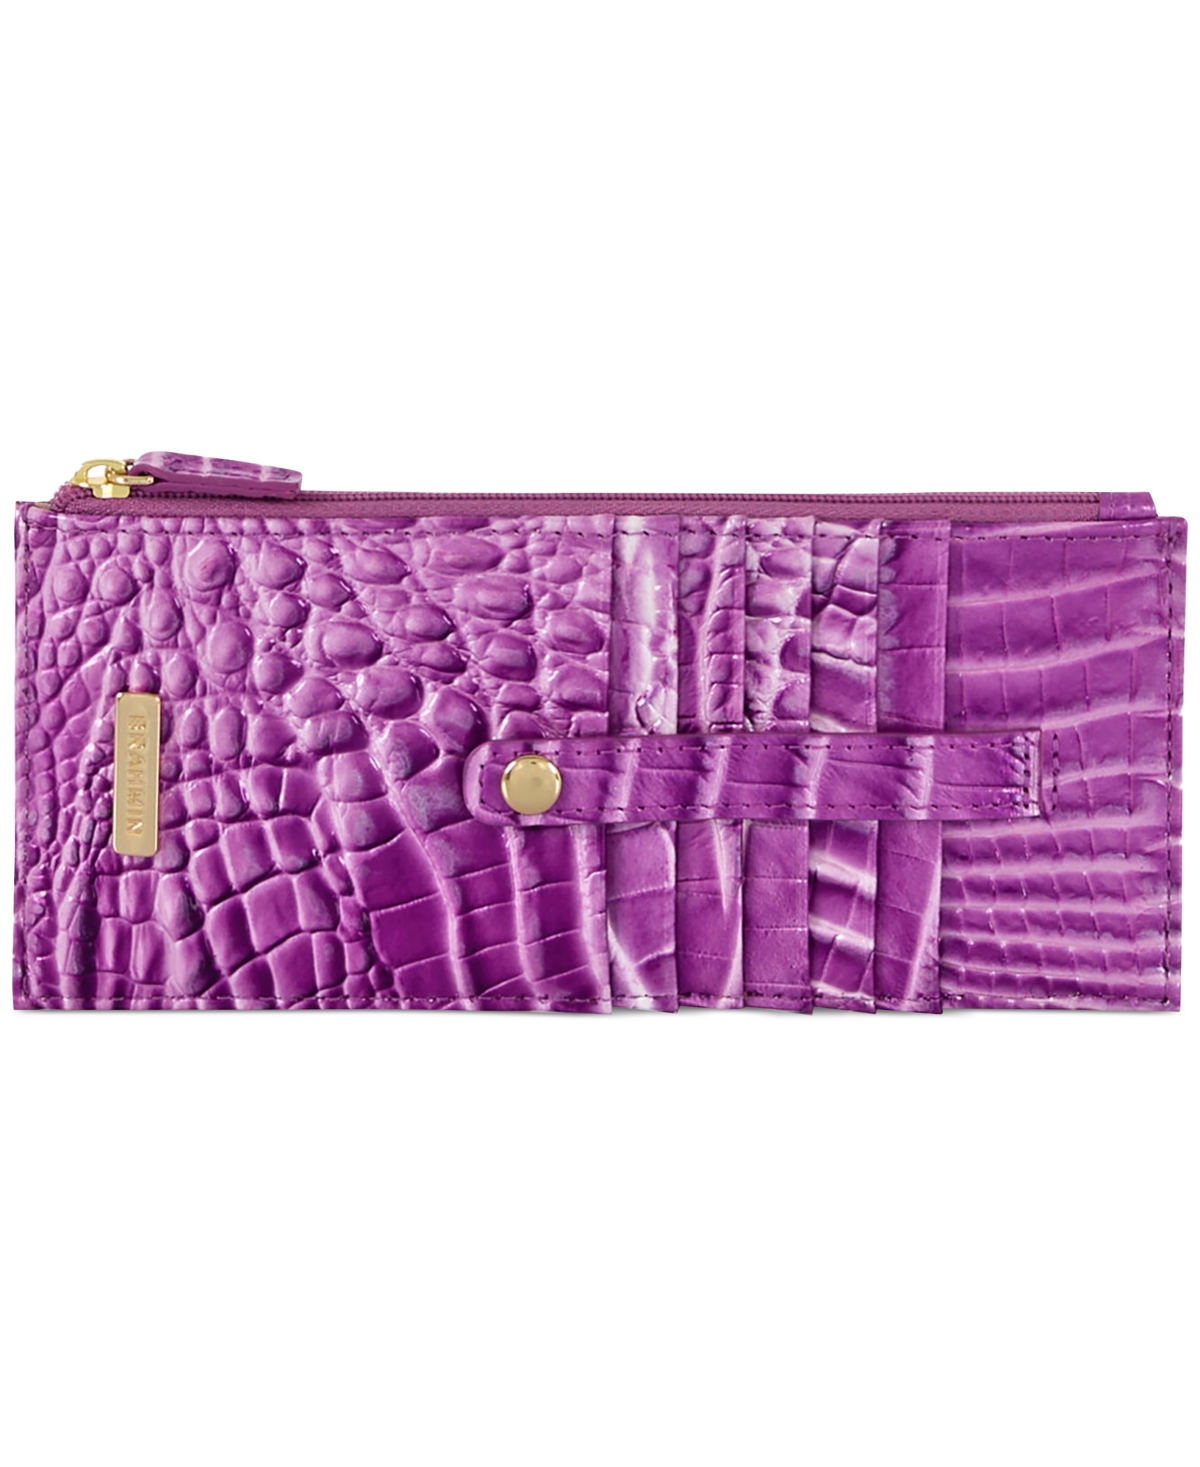 Credit Card Melbourne Embossed Leather Wallet - Lilac Esse